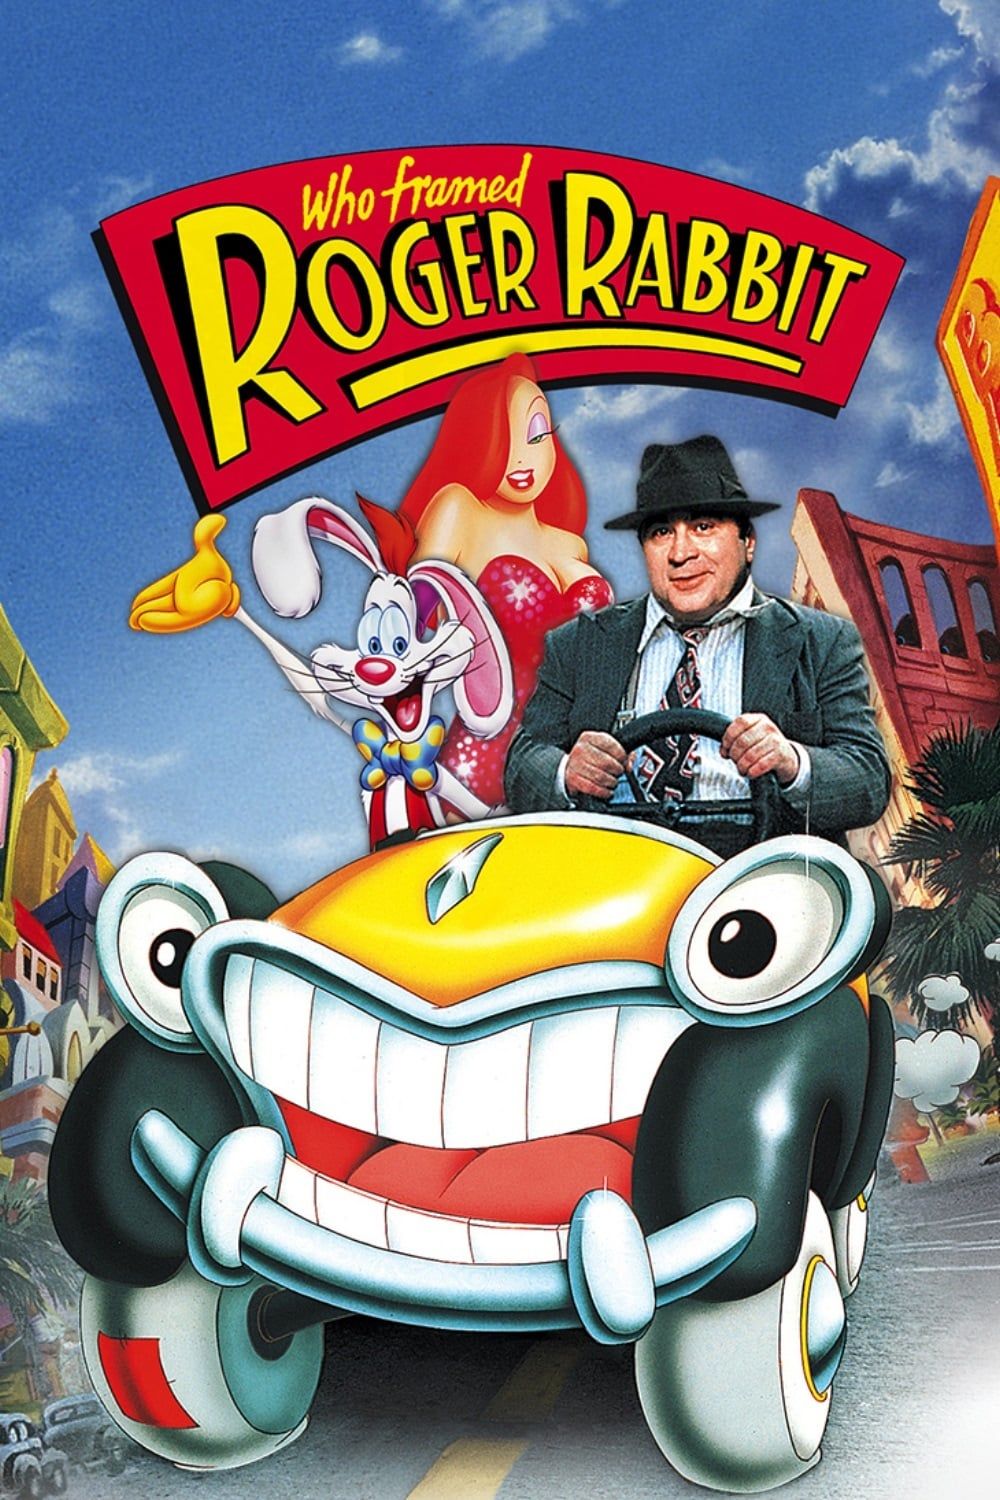 Quem incriminou Roger Rabbit?